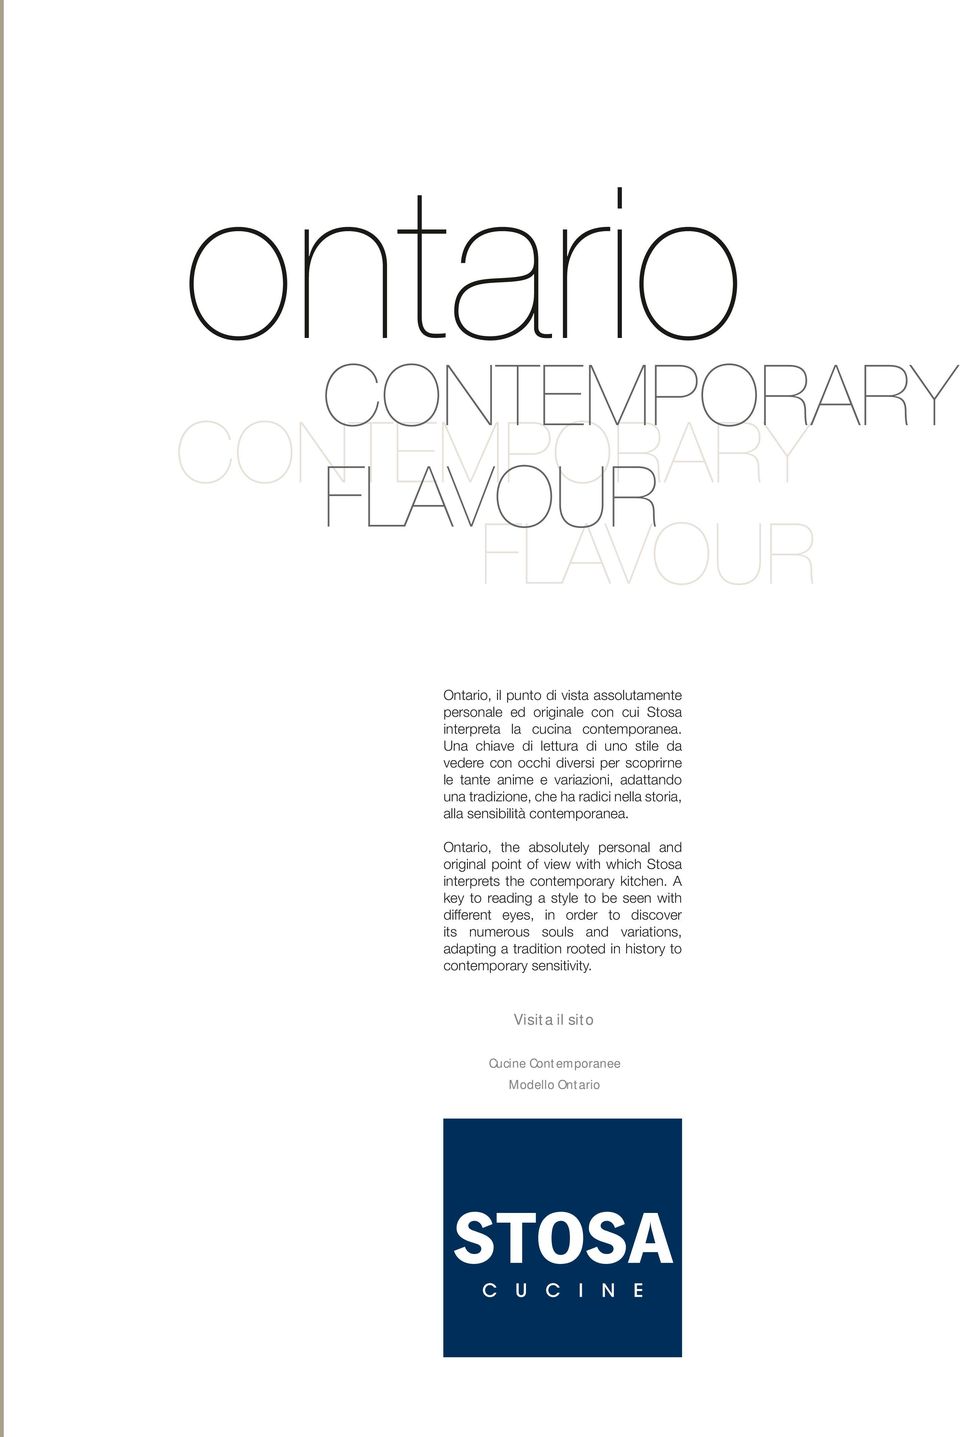 alla sensibilità contemporanea. Ontario, the absolutely personal and original point of view with which Stosa interprets the contemporary kitchen.